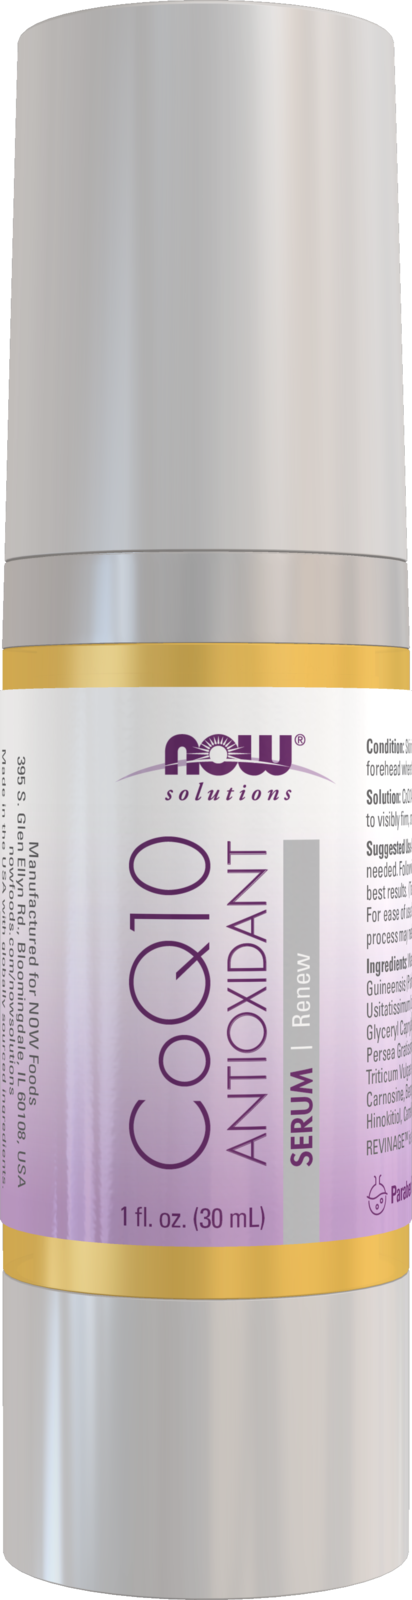 CoQ10 Antioxidant Serum - 1 fl. oz. Bottle Front